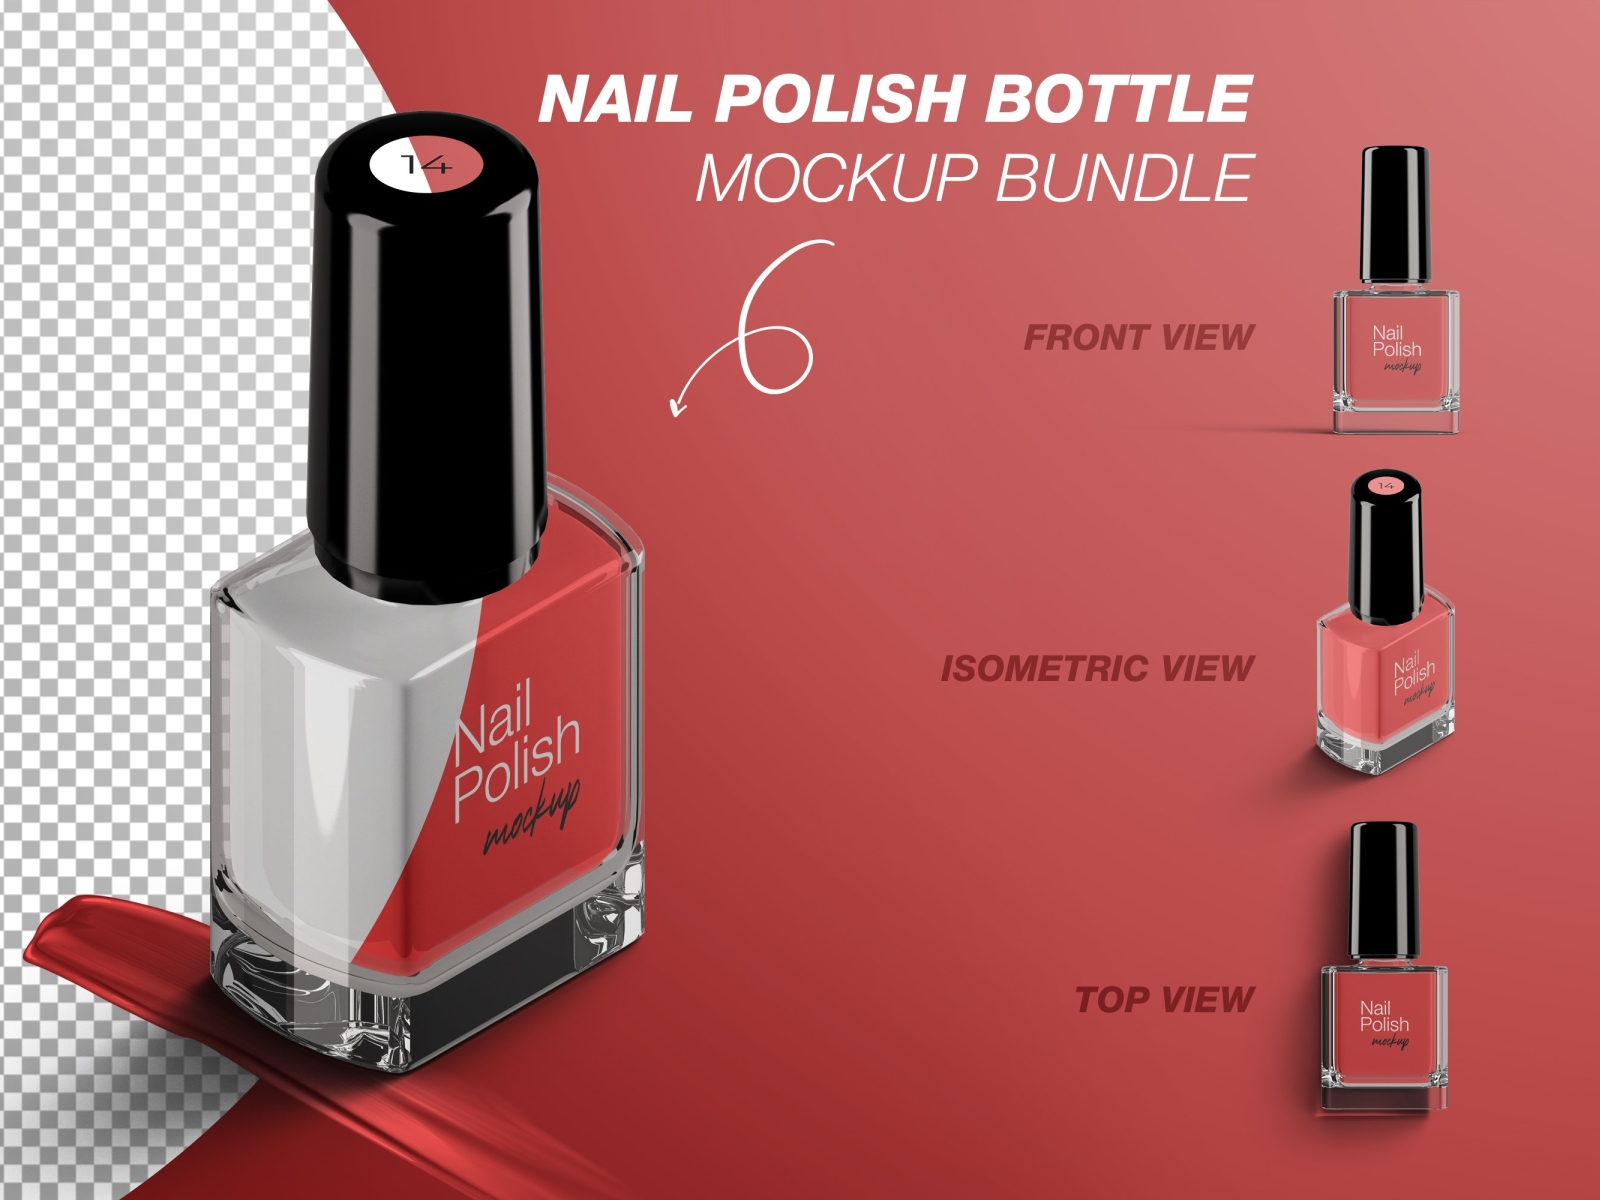 Download Nail Polish Bottle Mockup Bundle by Mockup5 on Dribbble